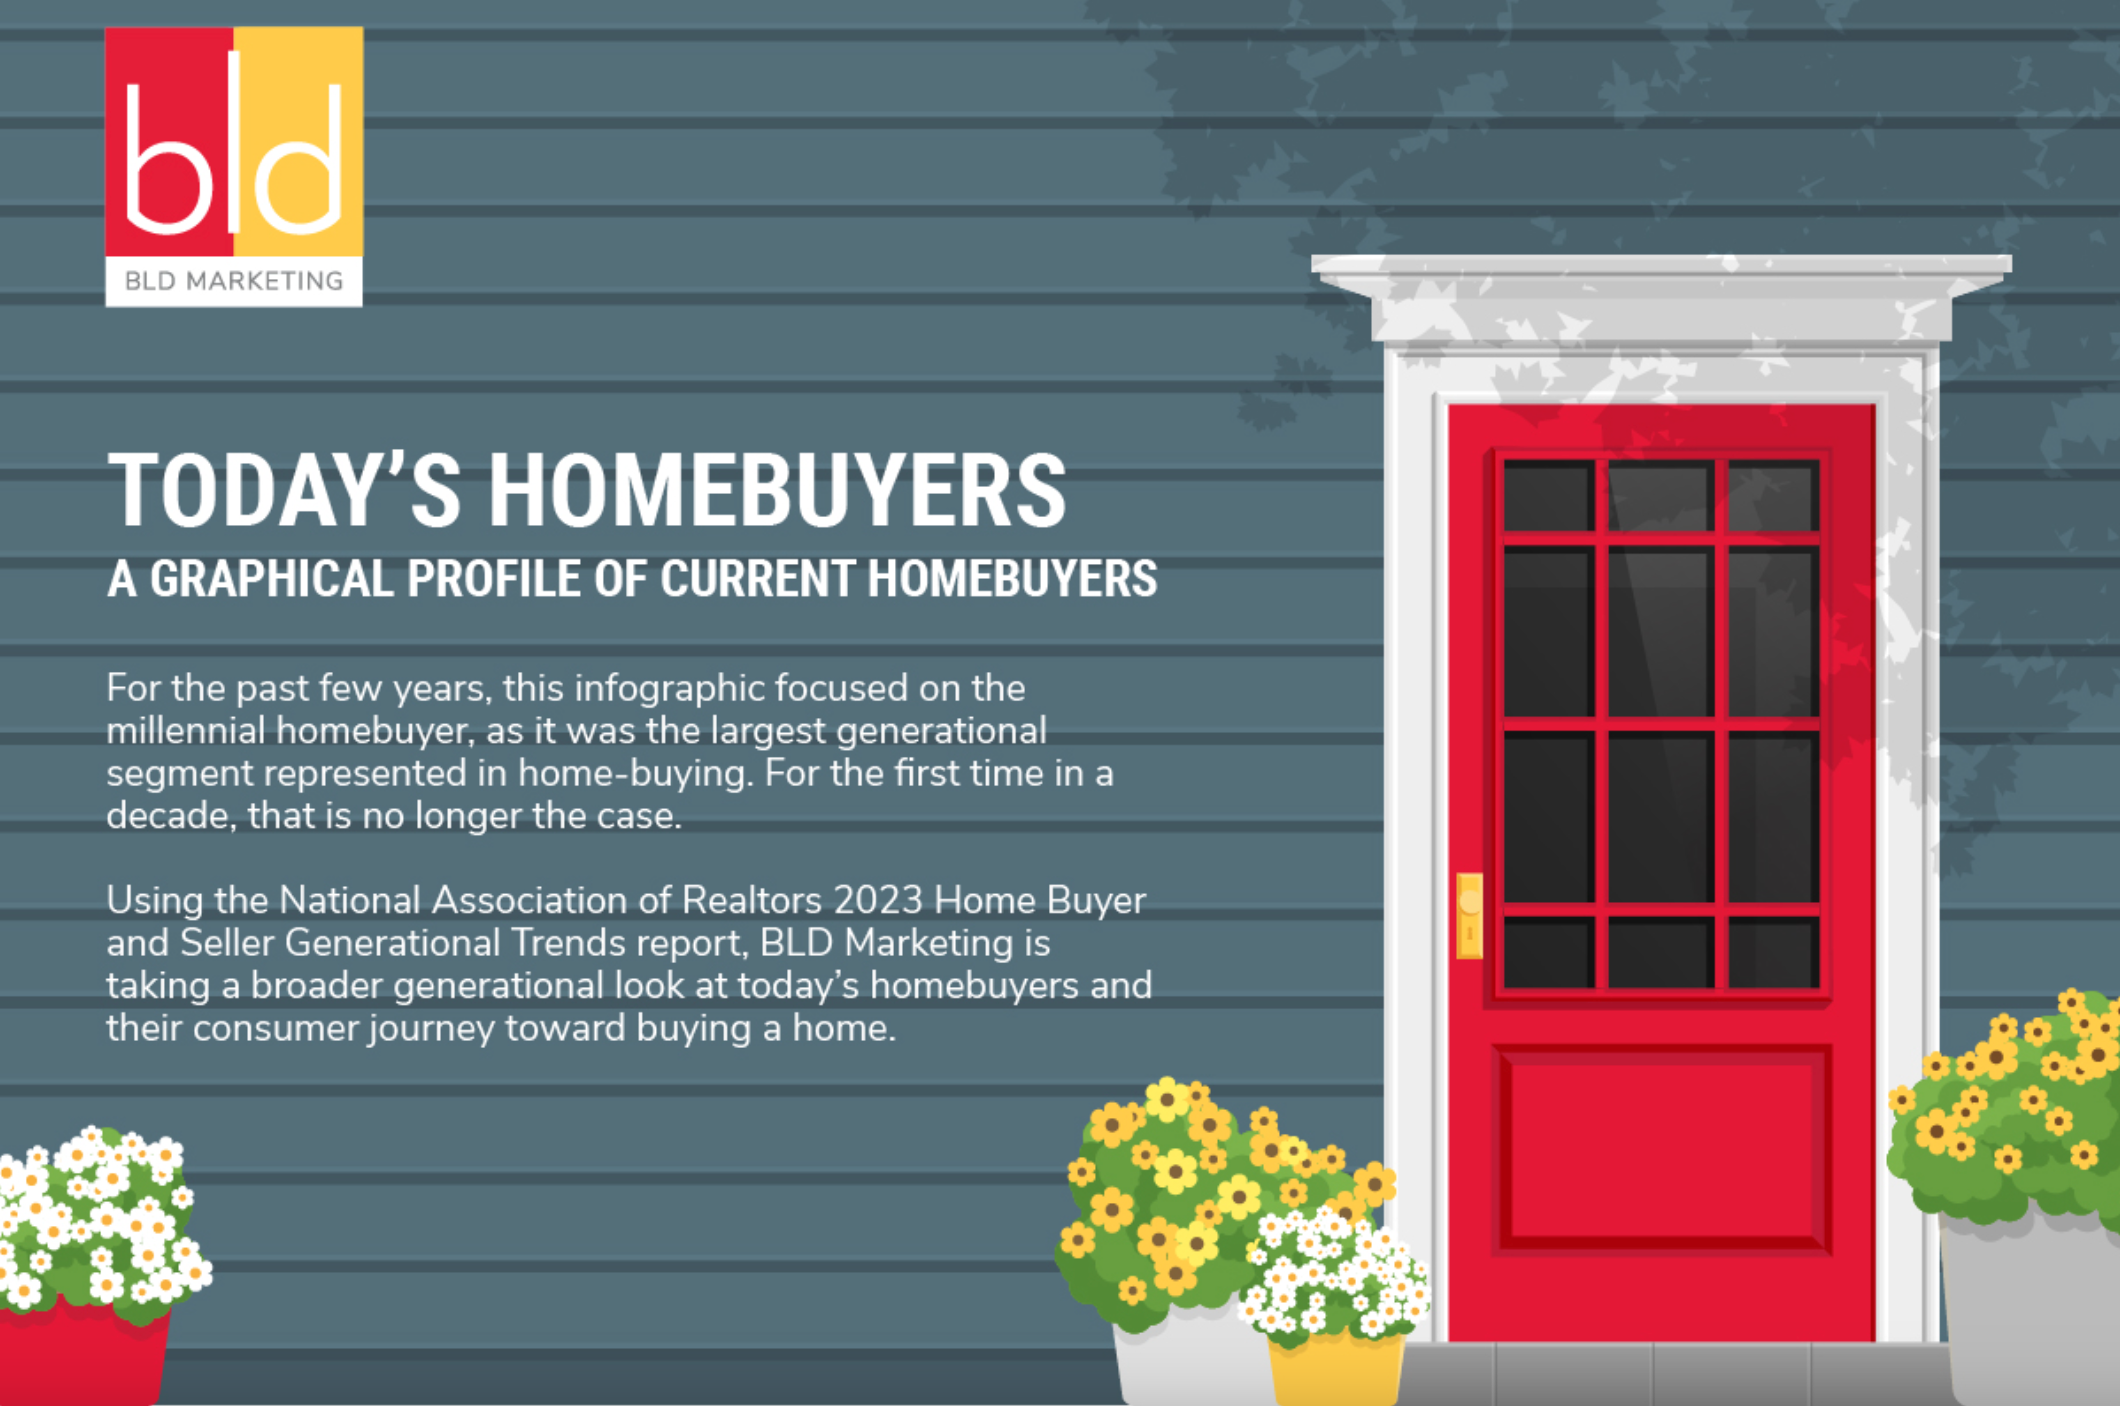 millenial homebuyer infographic bld marketing 2023